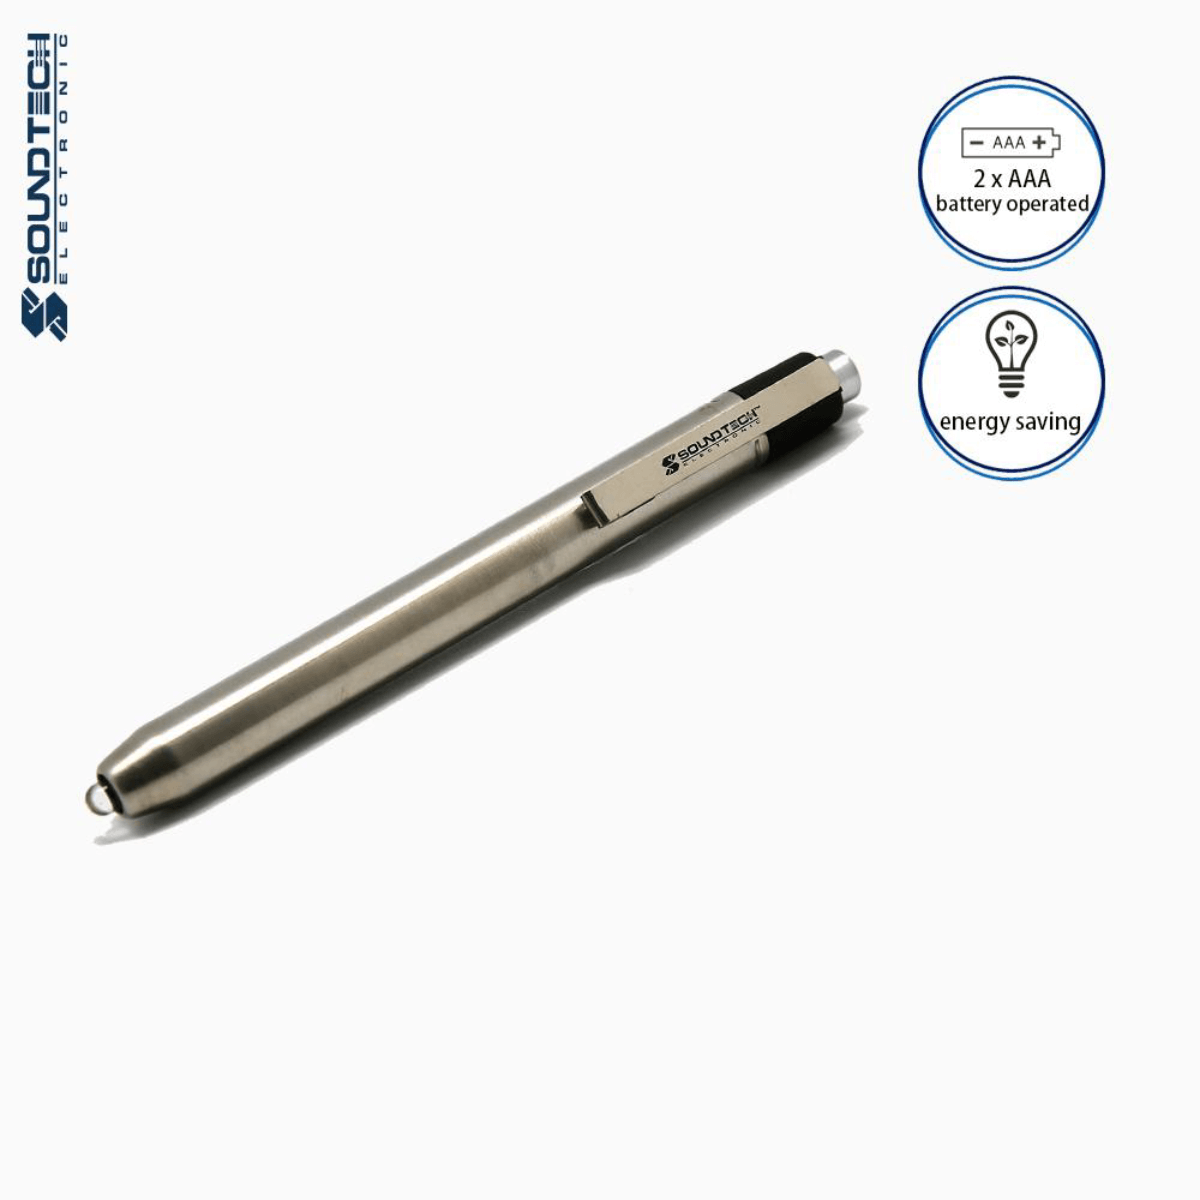 Soundteoh Pocket Penlight PL-106